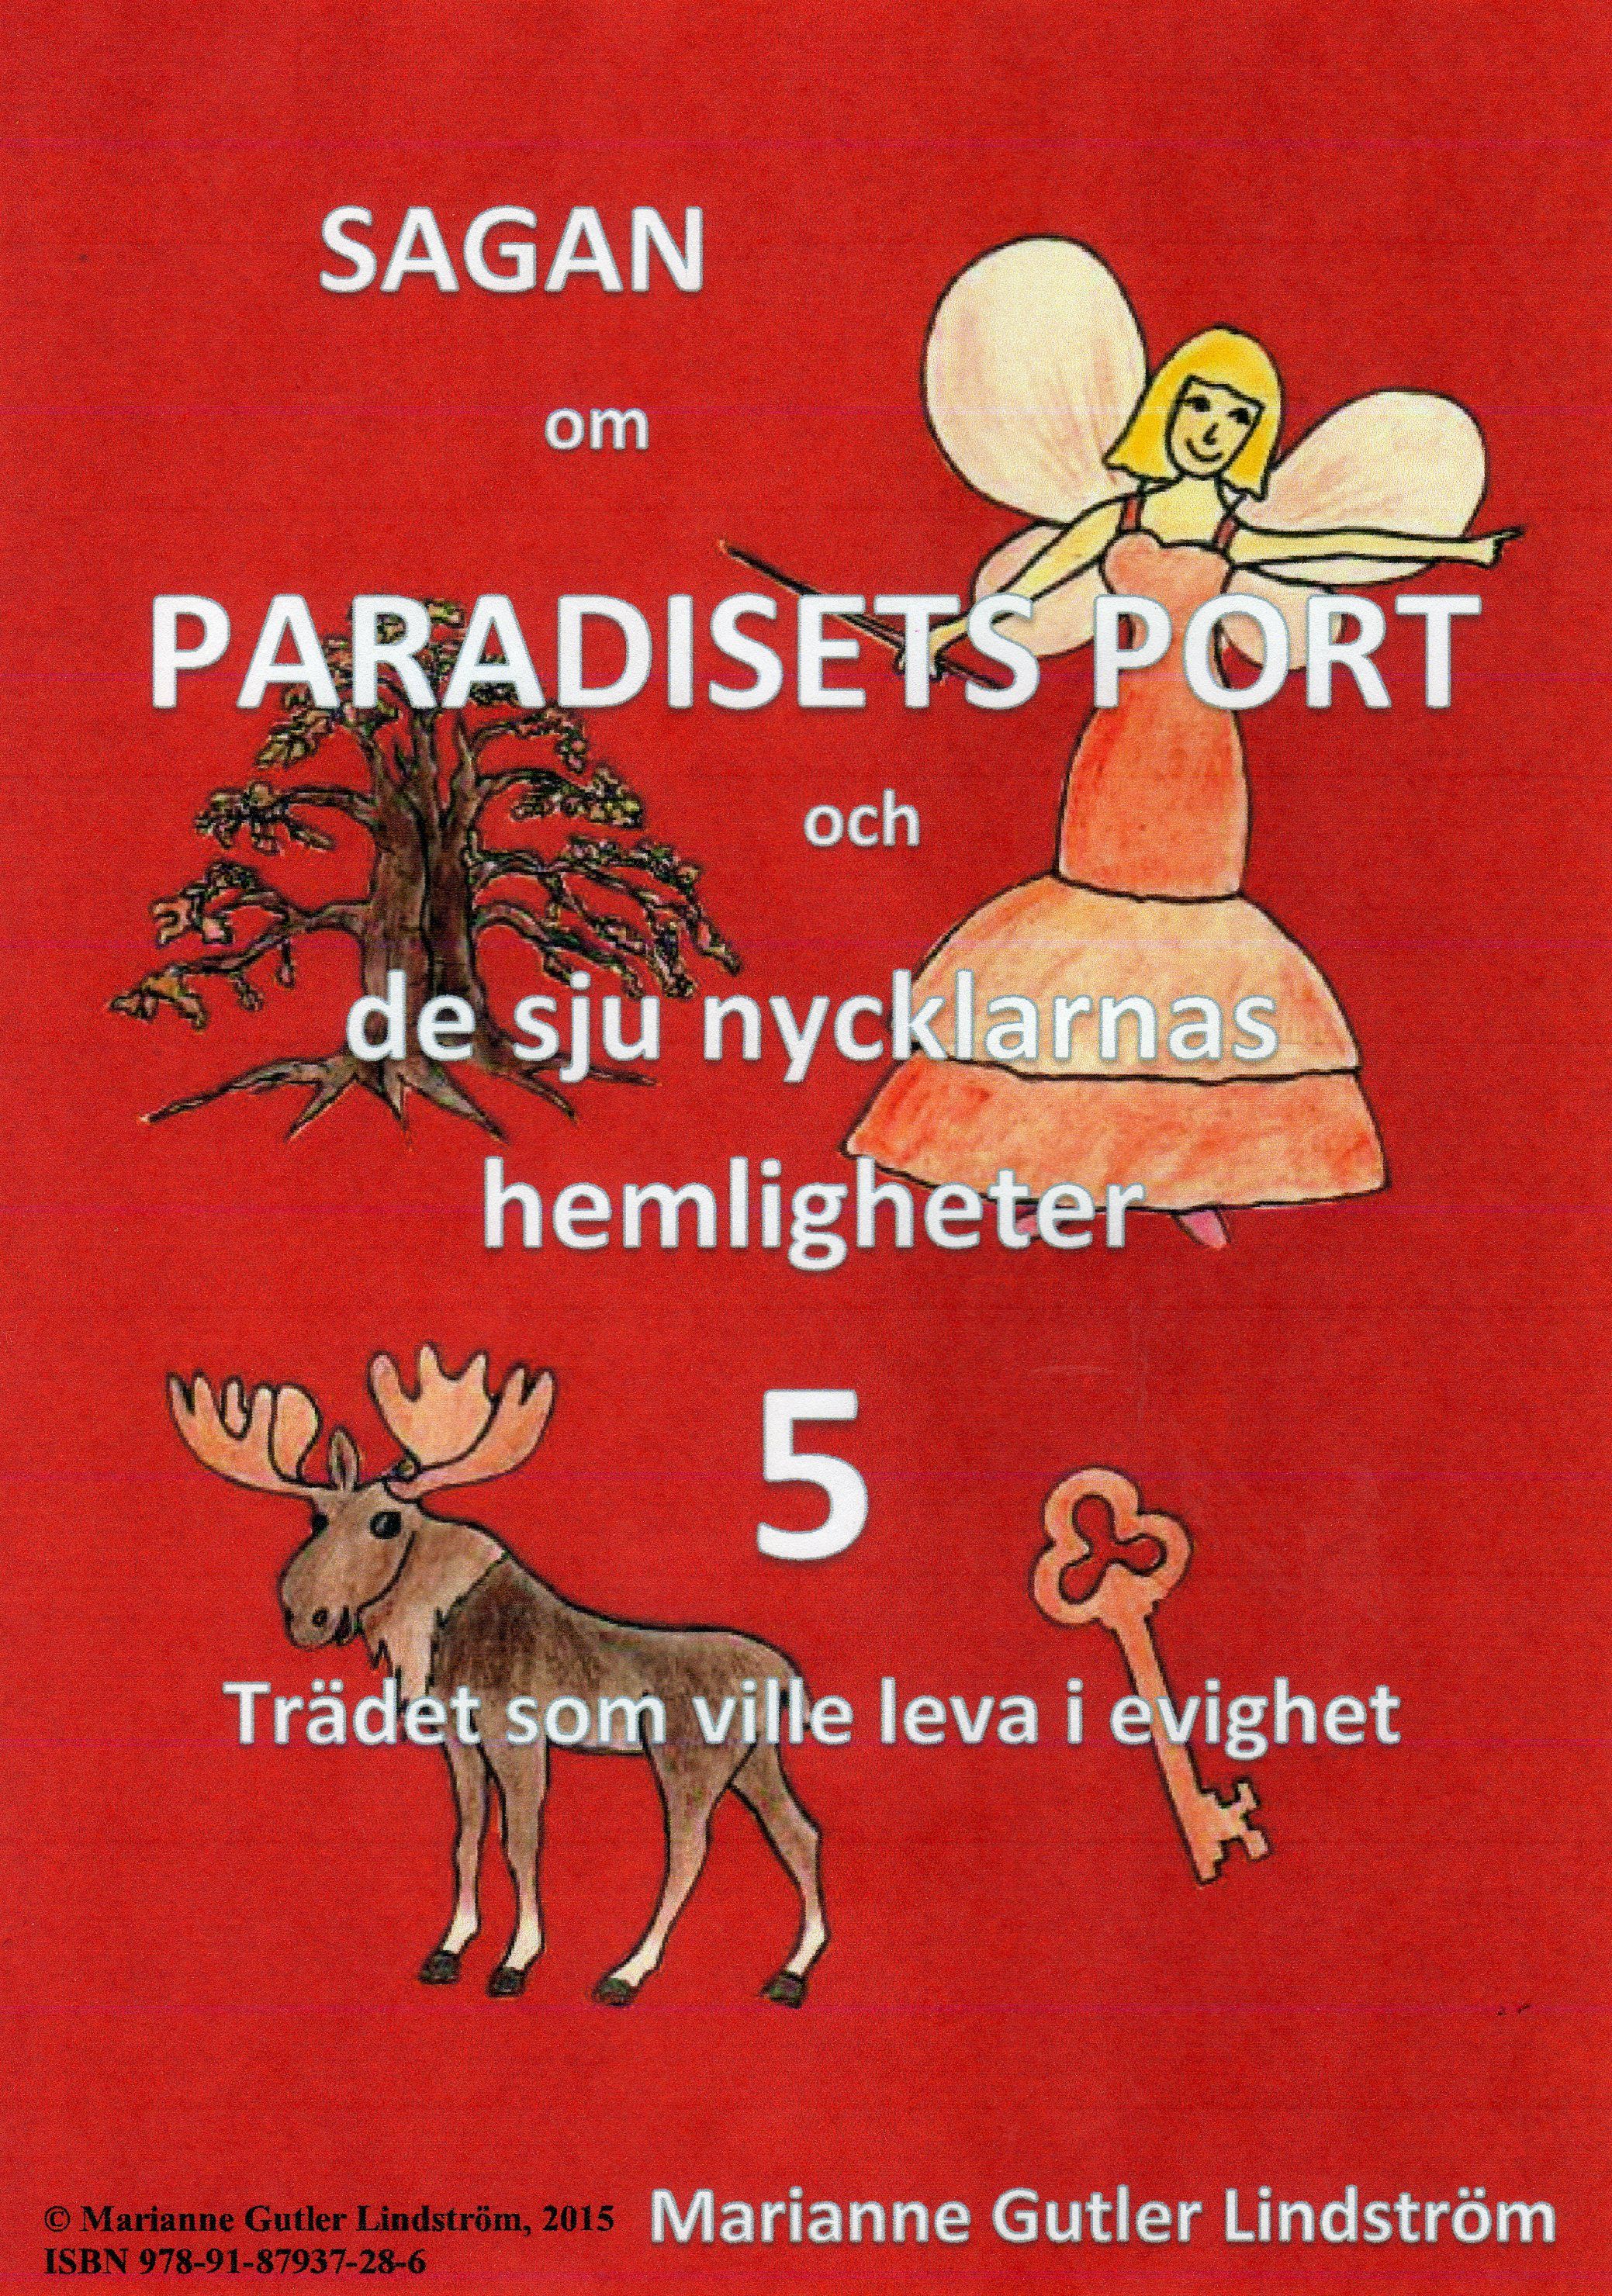 Sagan om Paradisets Port 5 Trädet som ville leva i evighet, e-bok av Marianne Gutler Lindström